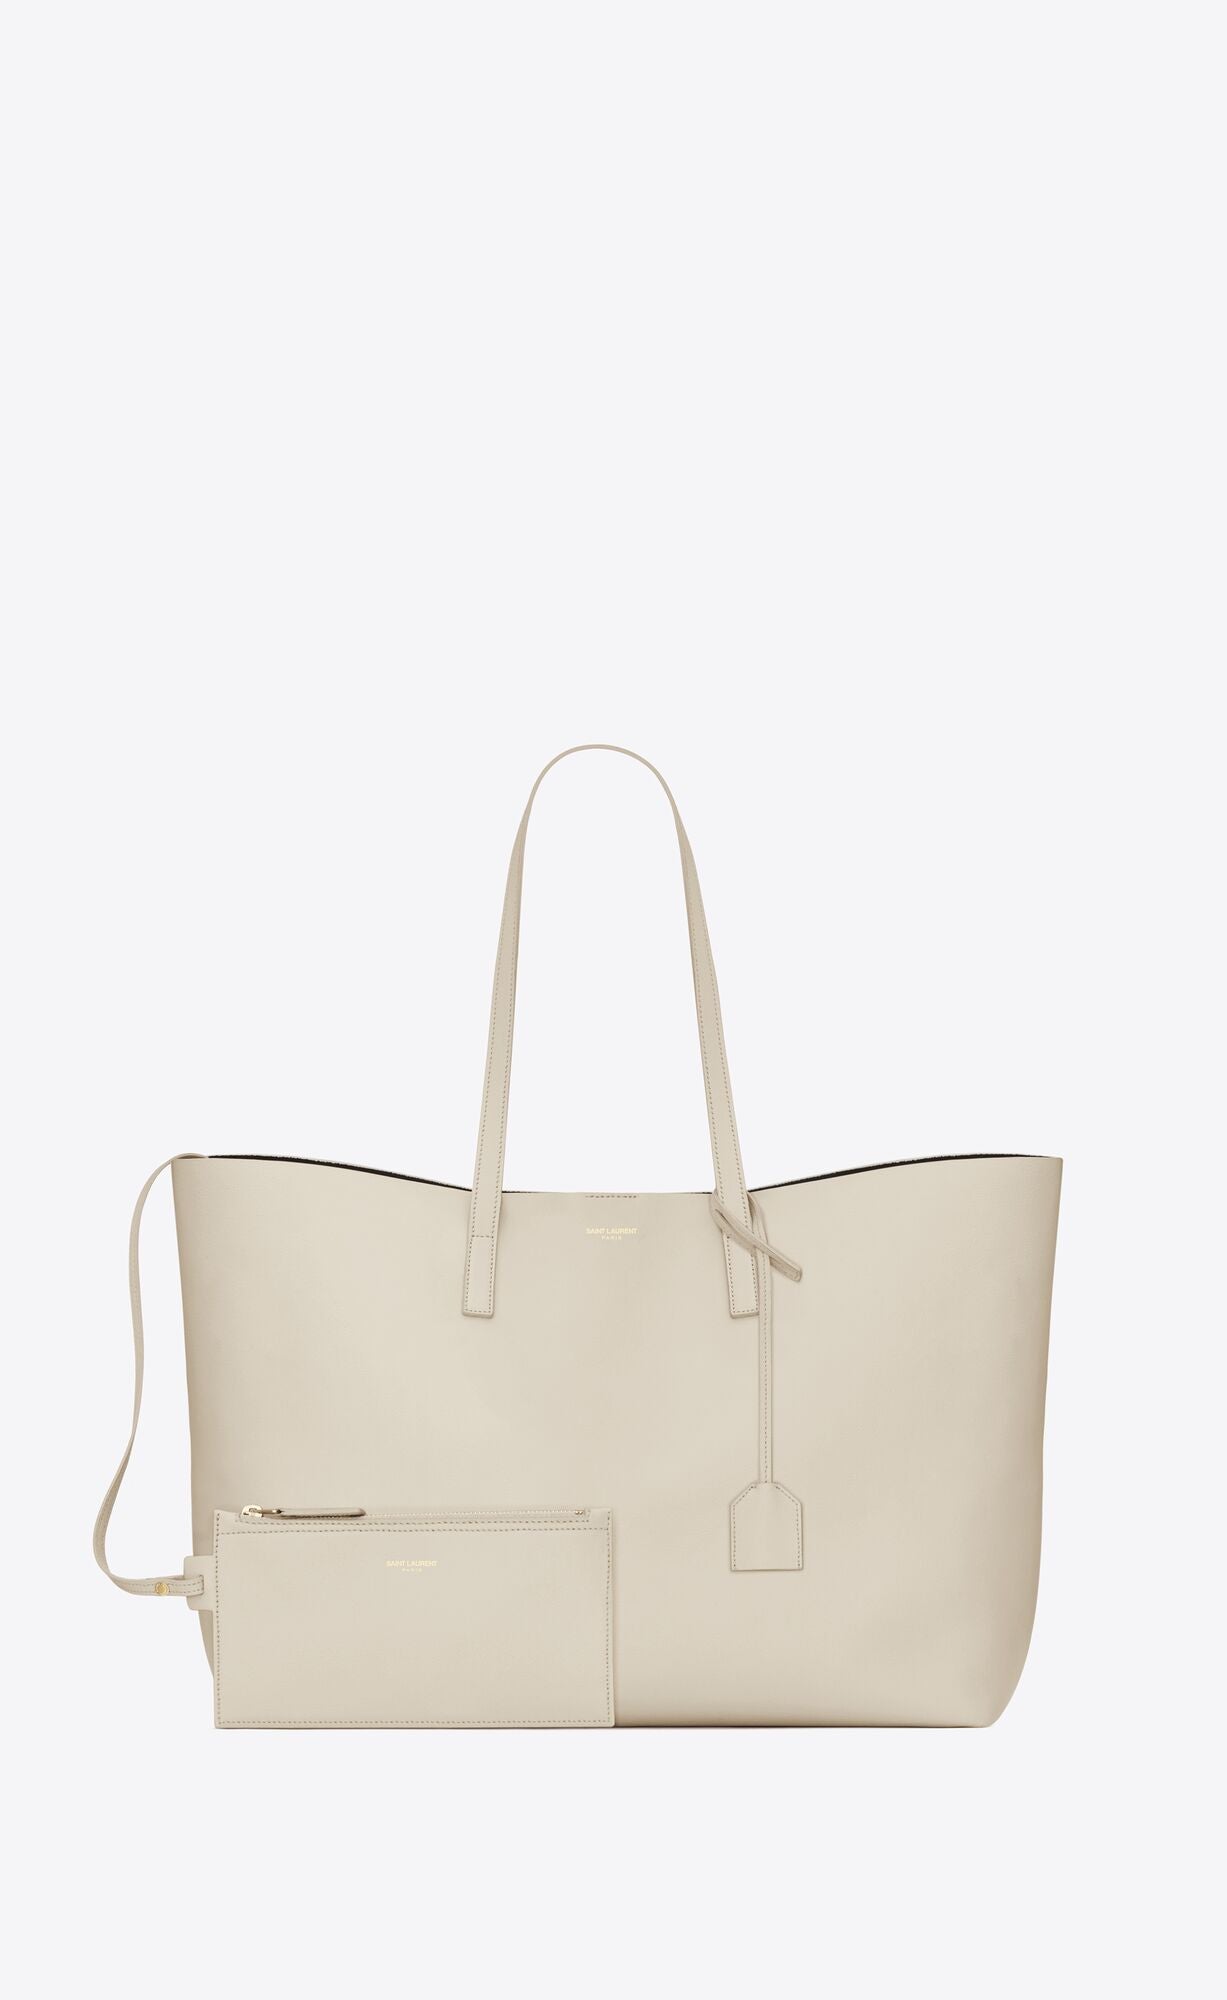 Saint Laurent White Calf Leather Tote Shoulder Bag | Fashionsarah.com